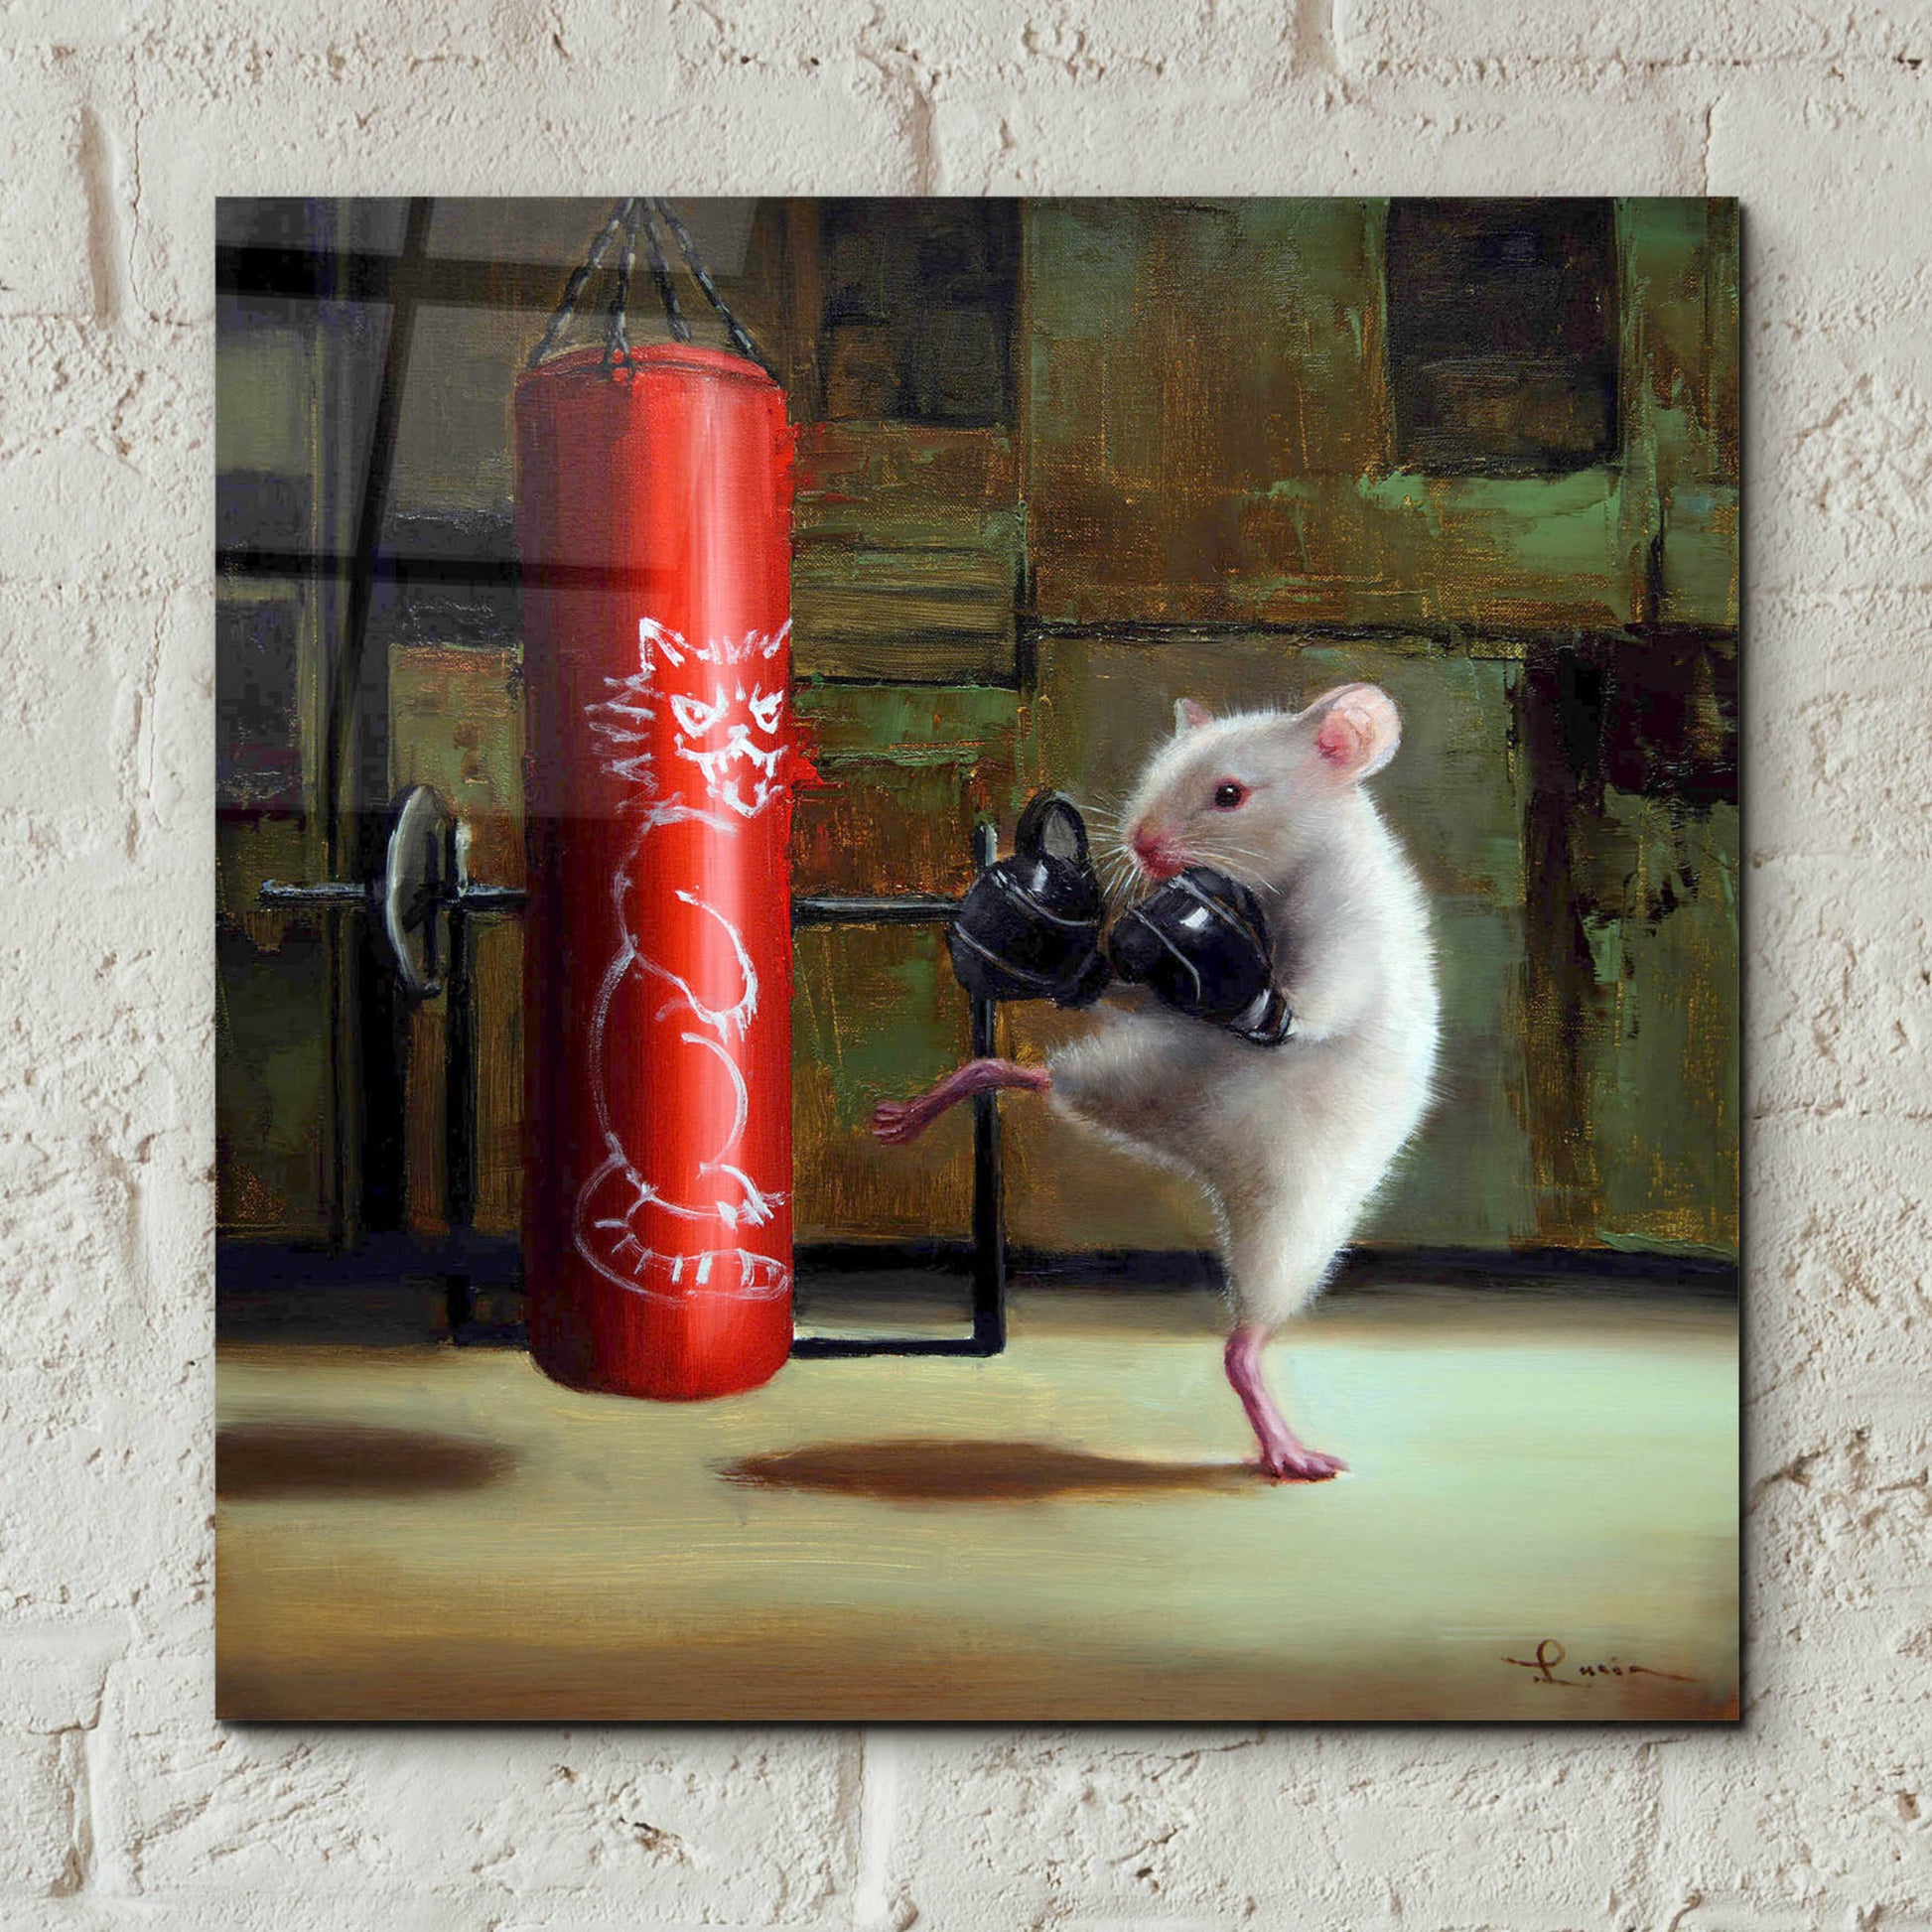 Epic Art 'Gym Rat' by Lucia Heffernan,12x12